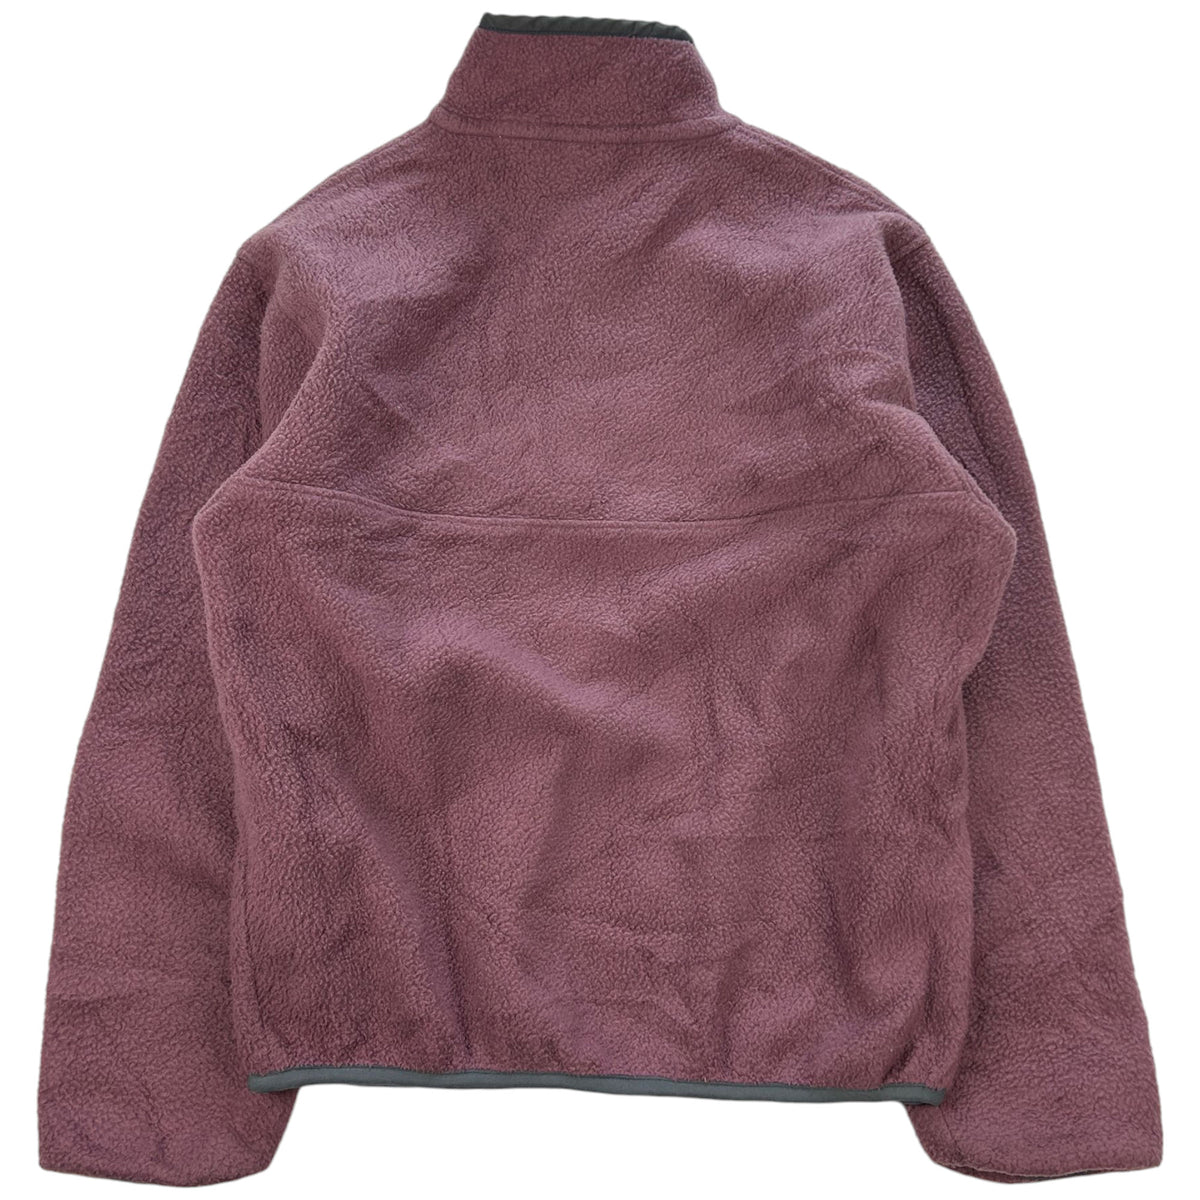 Vintage Patagonia Snap T Fleece Jumper Size S